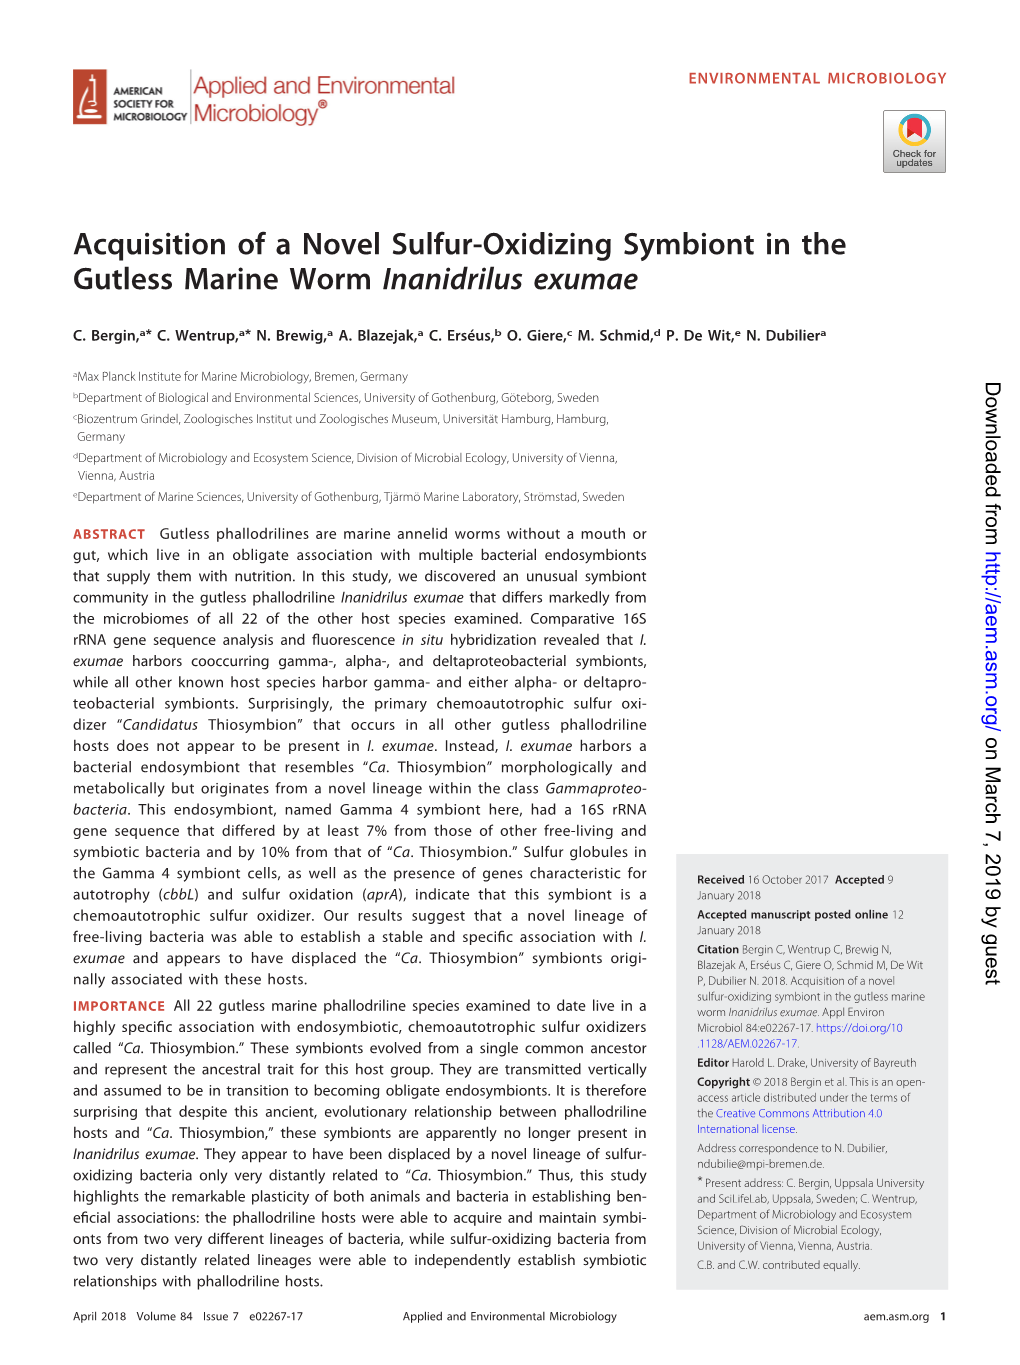 Acquisition of a Novel Sulfur-Oxidizing Symbiont in the Gutless Marine Worm Inanidrilus Exumae